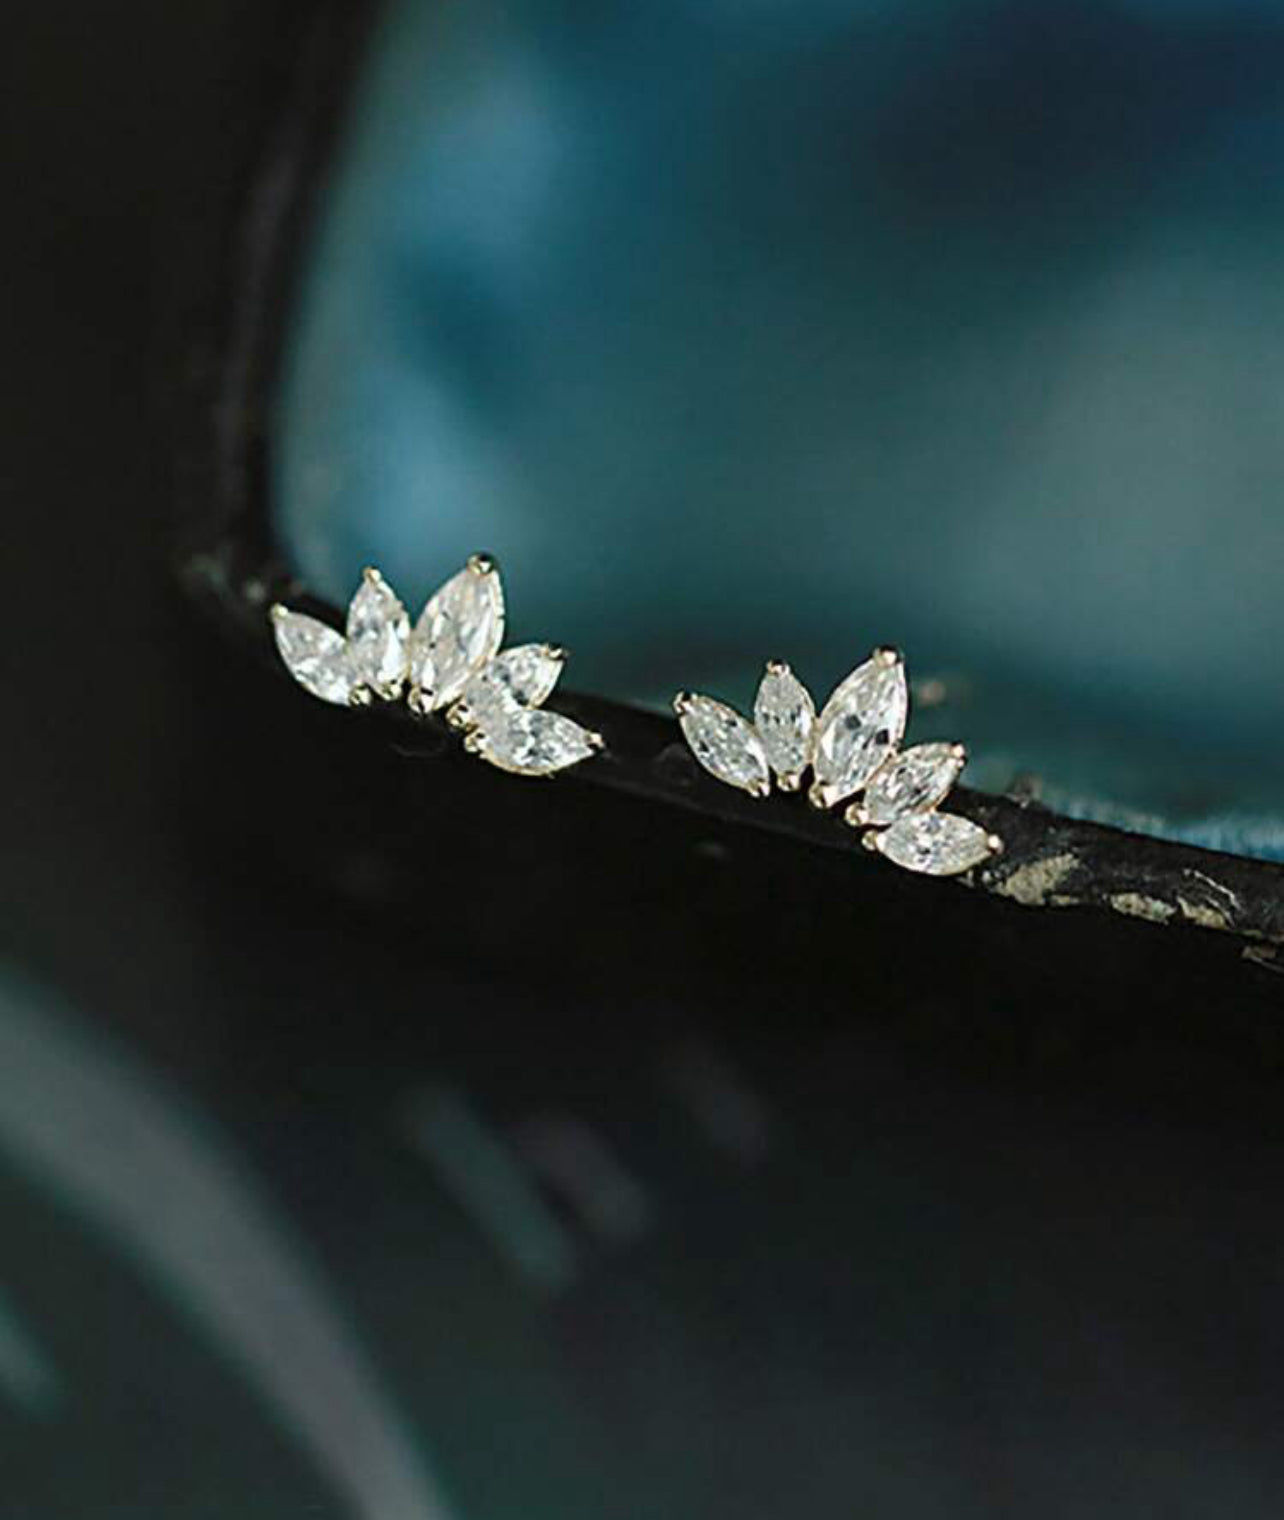 Mini Crown earrings